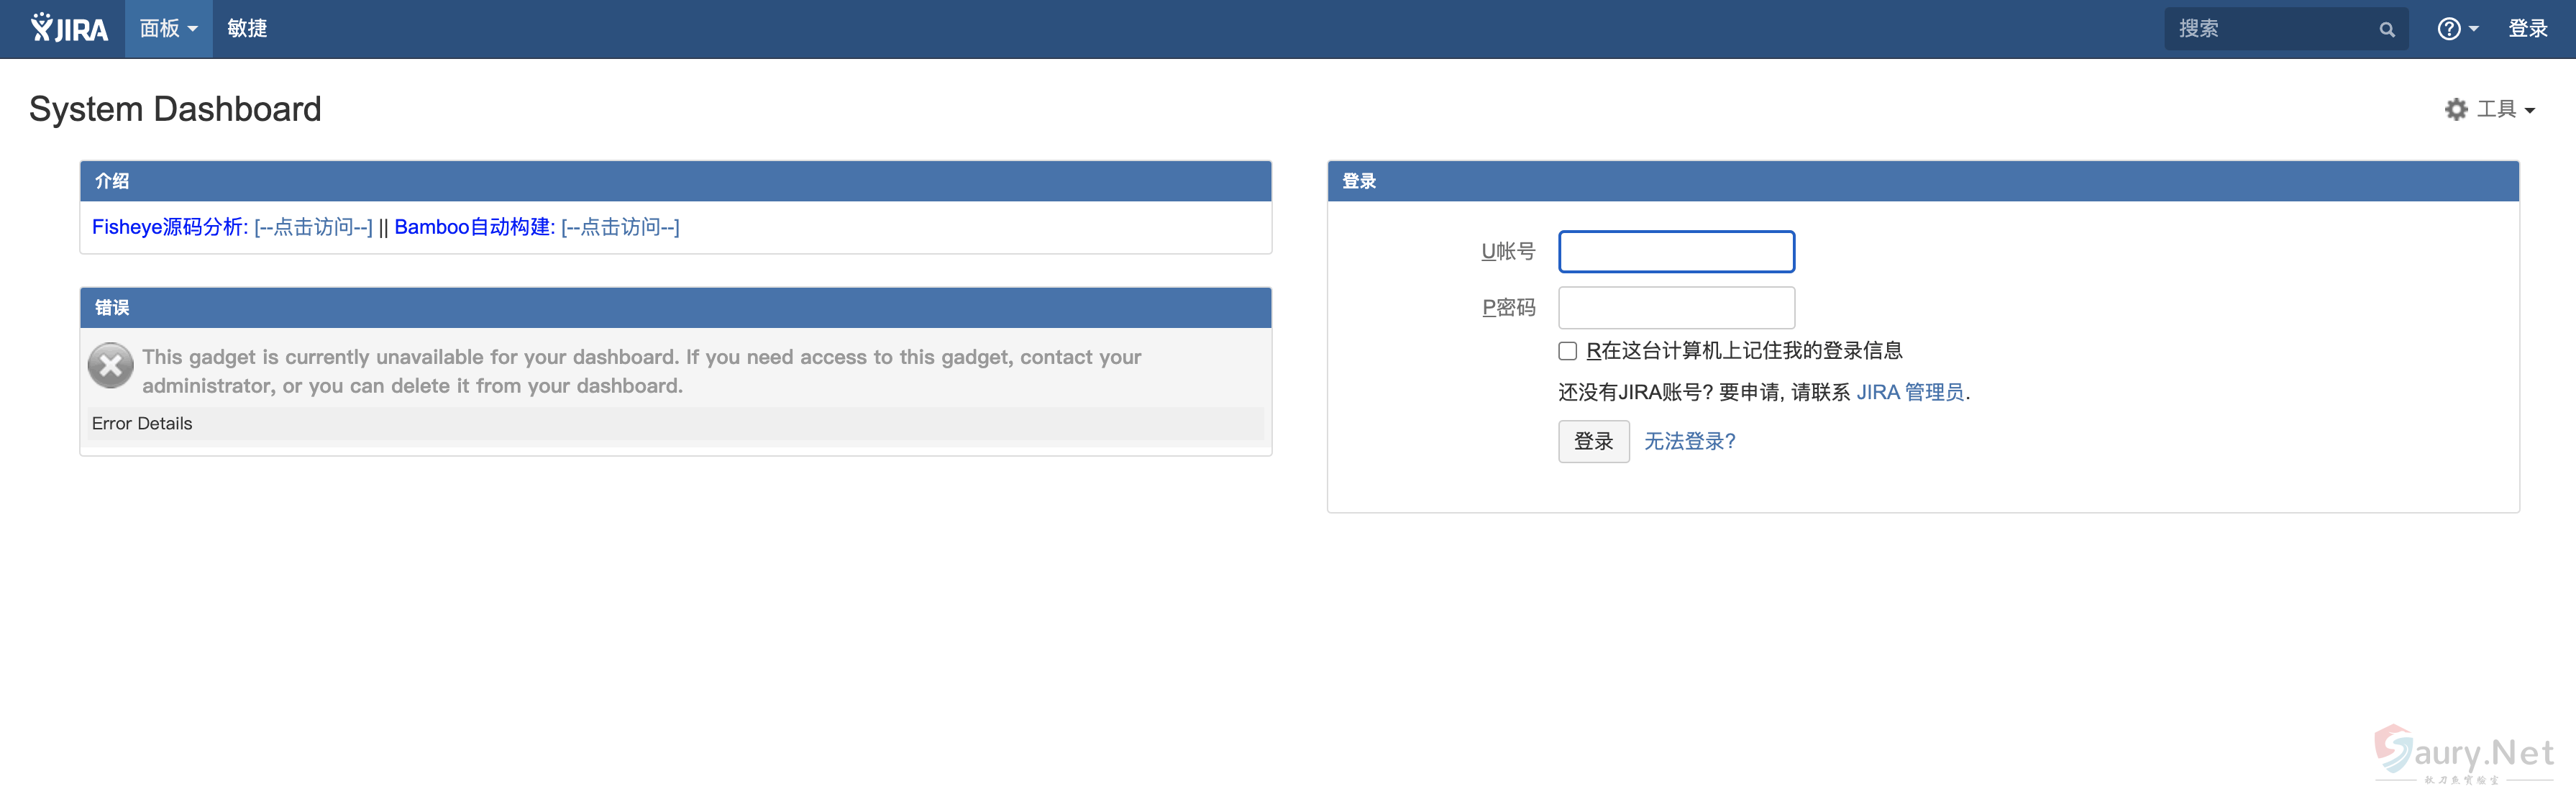 Atlassian Jira groupuserpicker 用户信息枚举漏洞 #CVE-2019-8449-秋刀鱼实验室